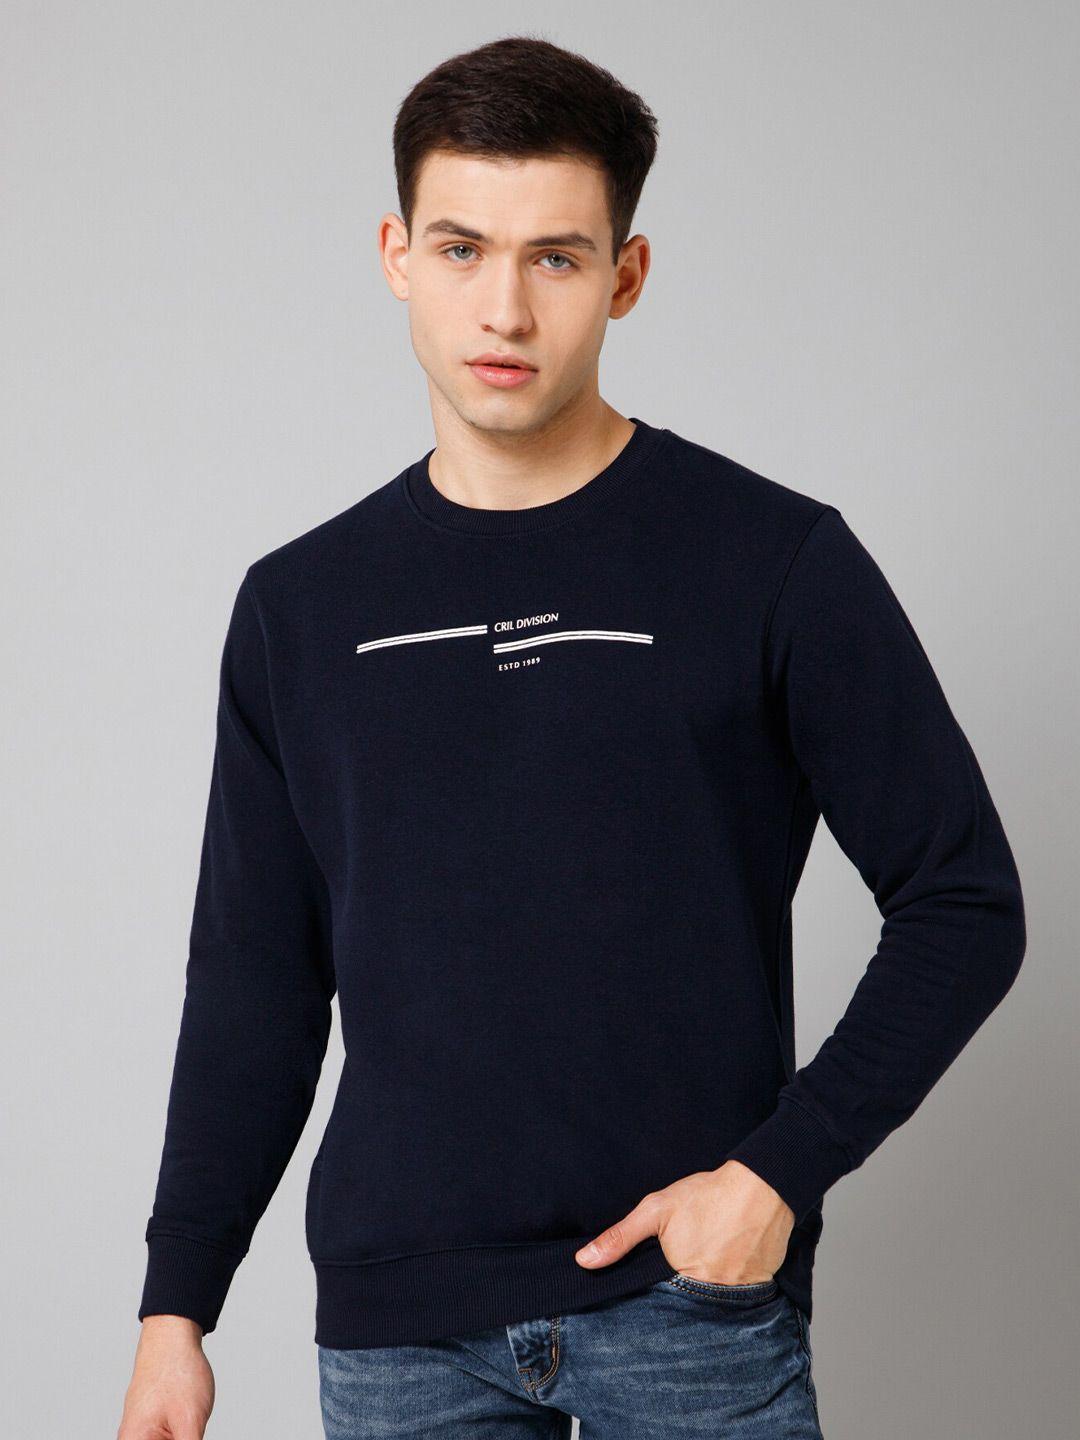 cantabil typography printed fleece pullover sweatshirt